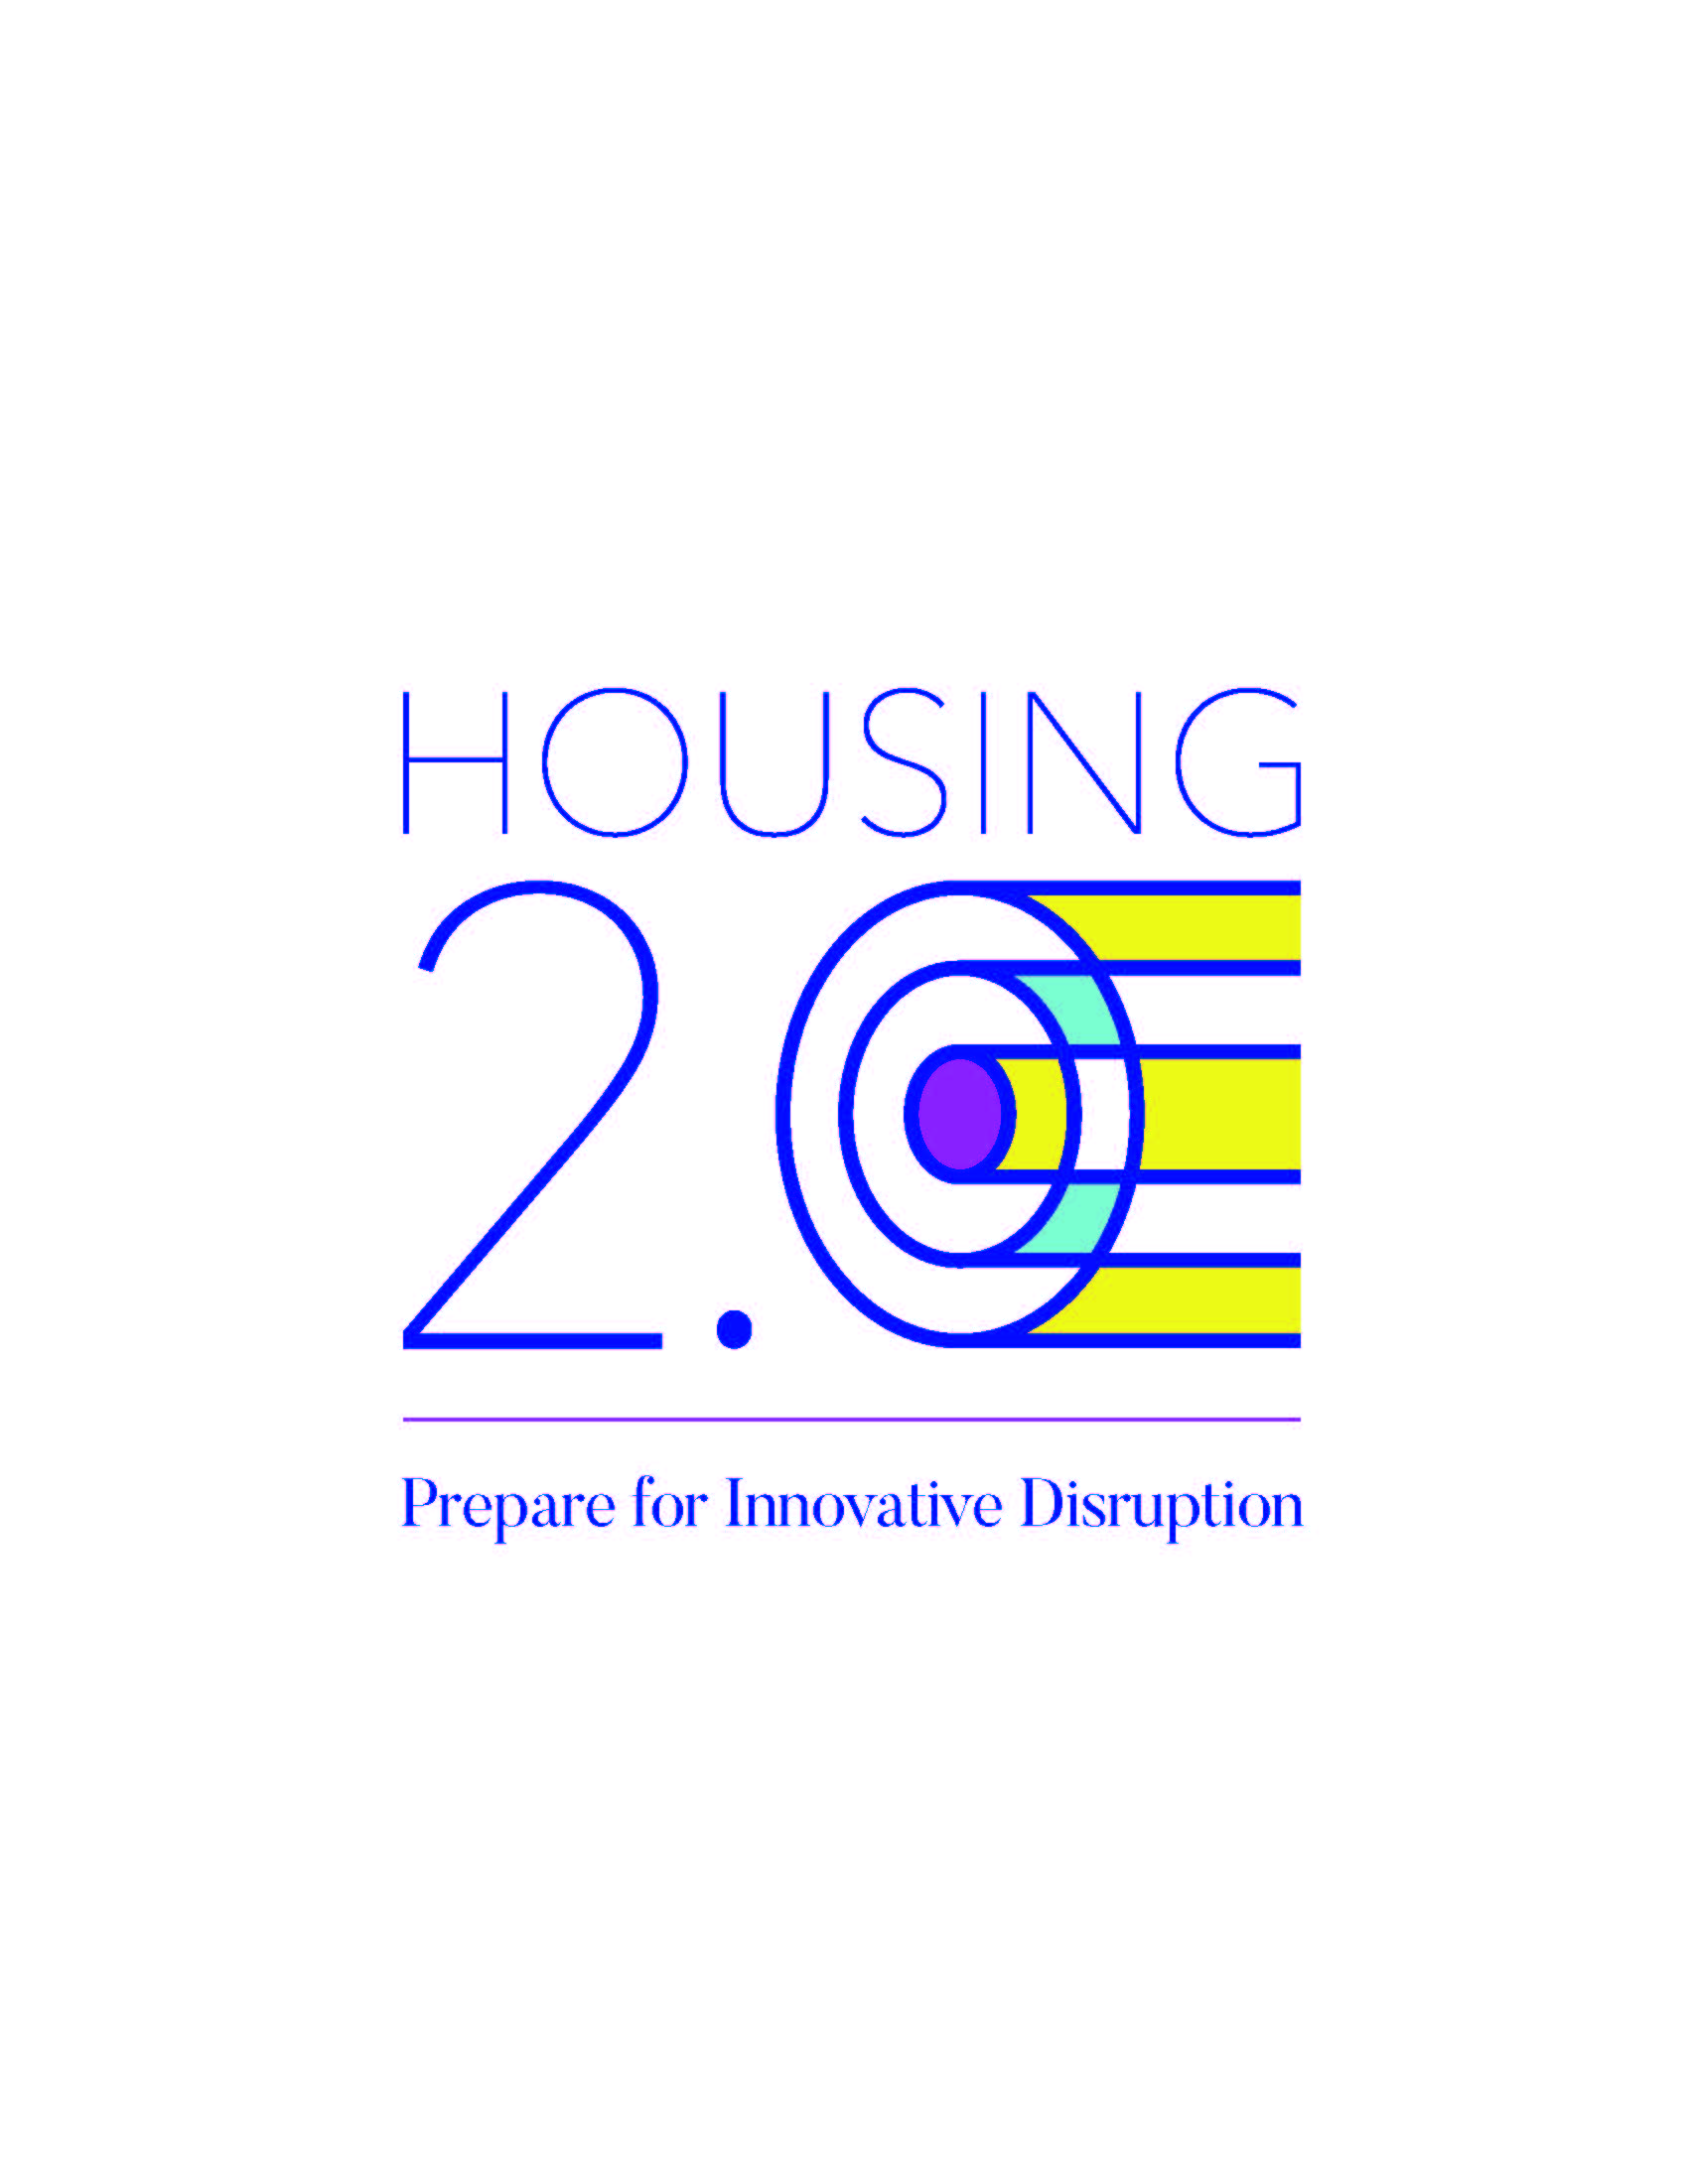 Join the next session of Housing 2.0! https://www.greenbuildermedia.com/housing-2.0